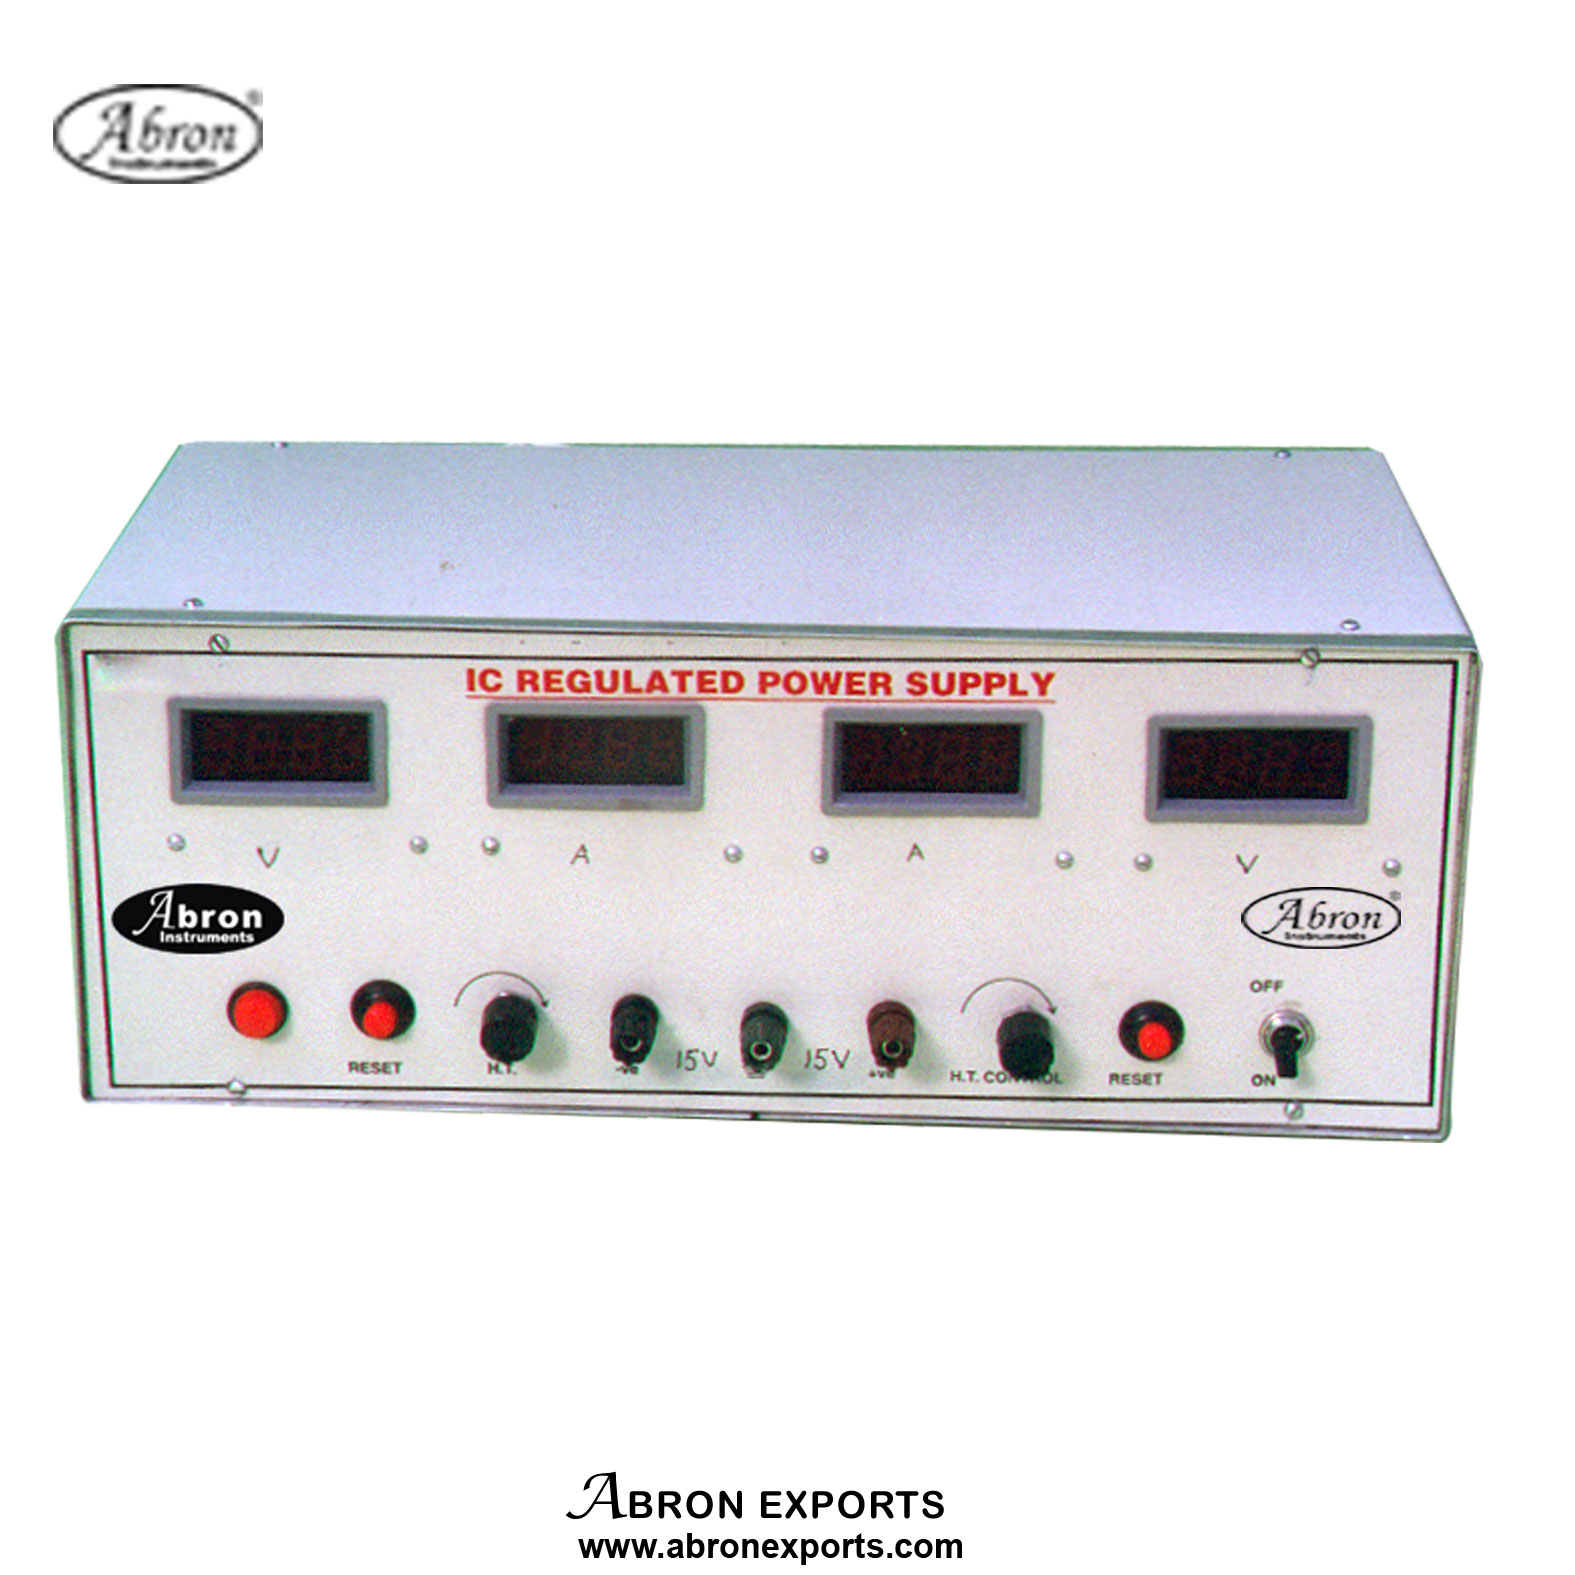 Power supply Digital Dual 0-15VDC 2 Amp 0-15VDC 2Amp with separate controls and display 2+2 Meters Digital  AE-1377DD151 